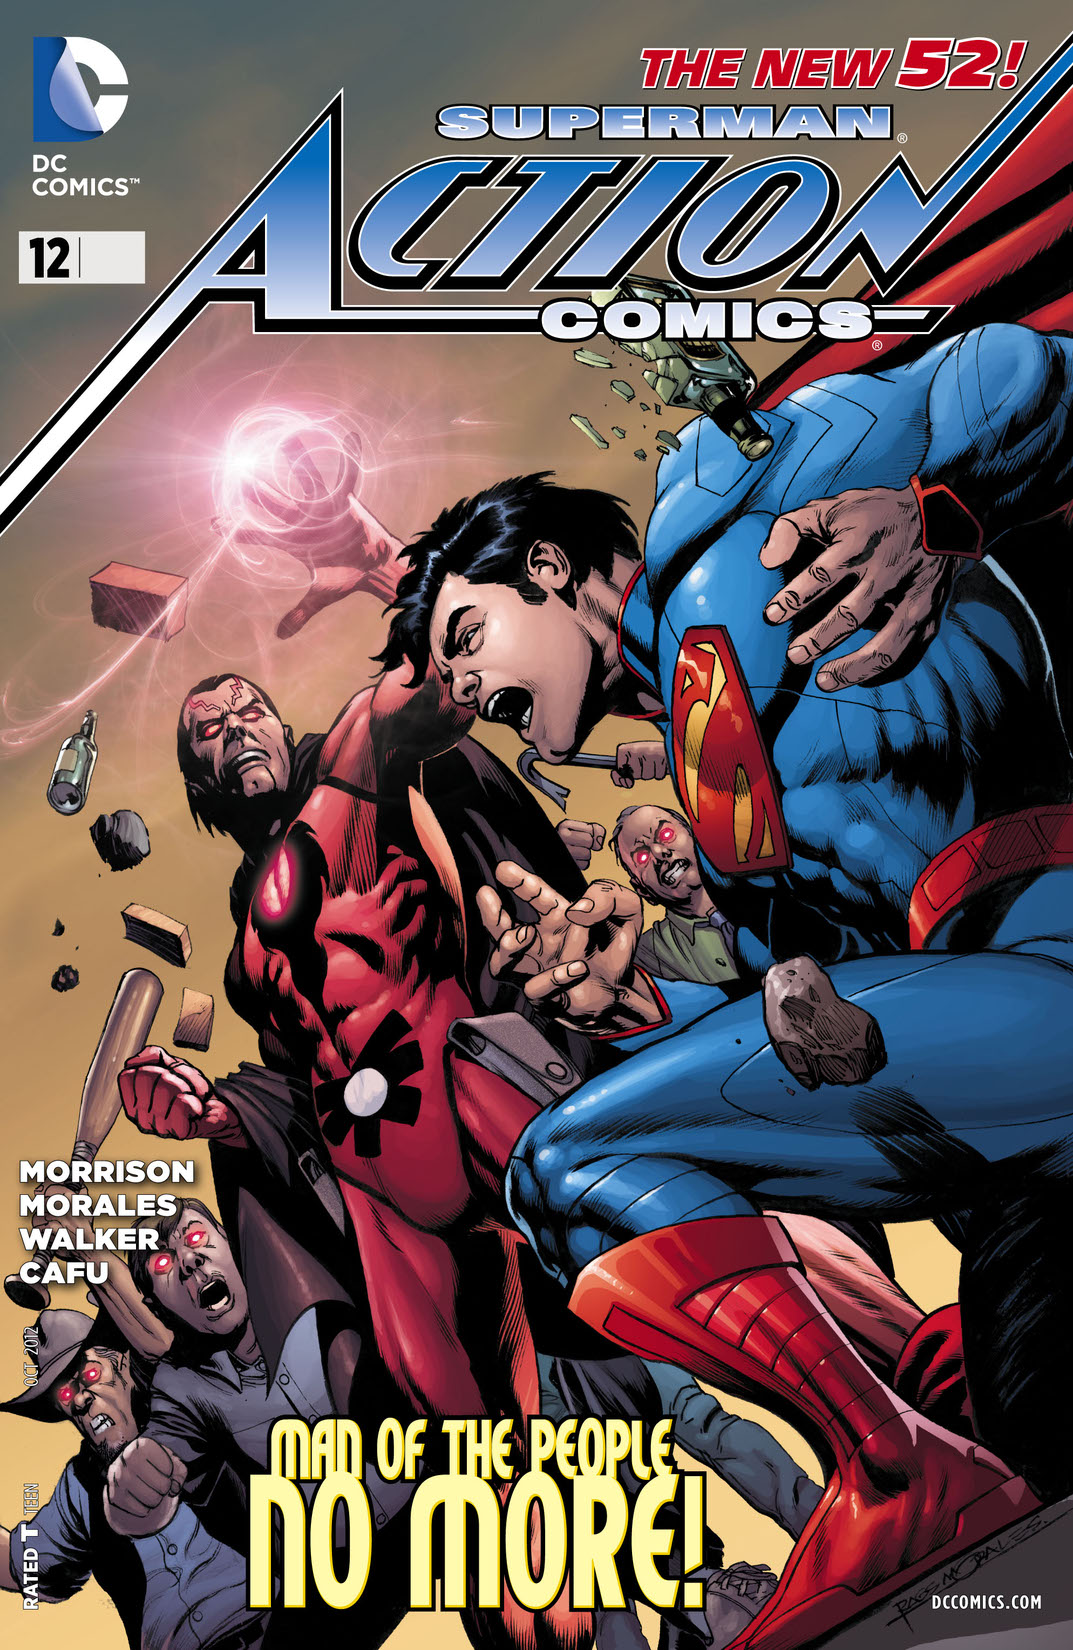 Action Comics (2011-) #12 preview images